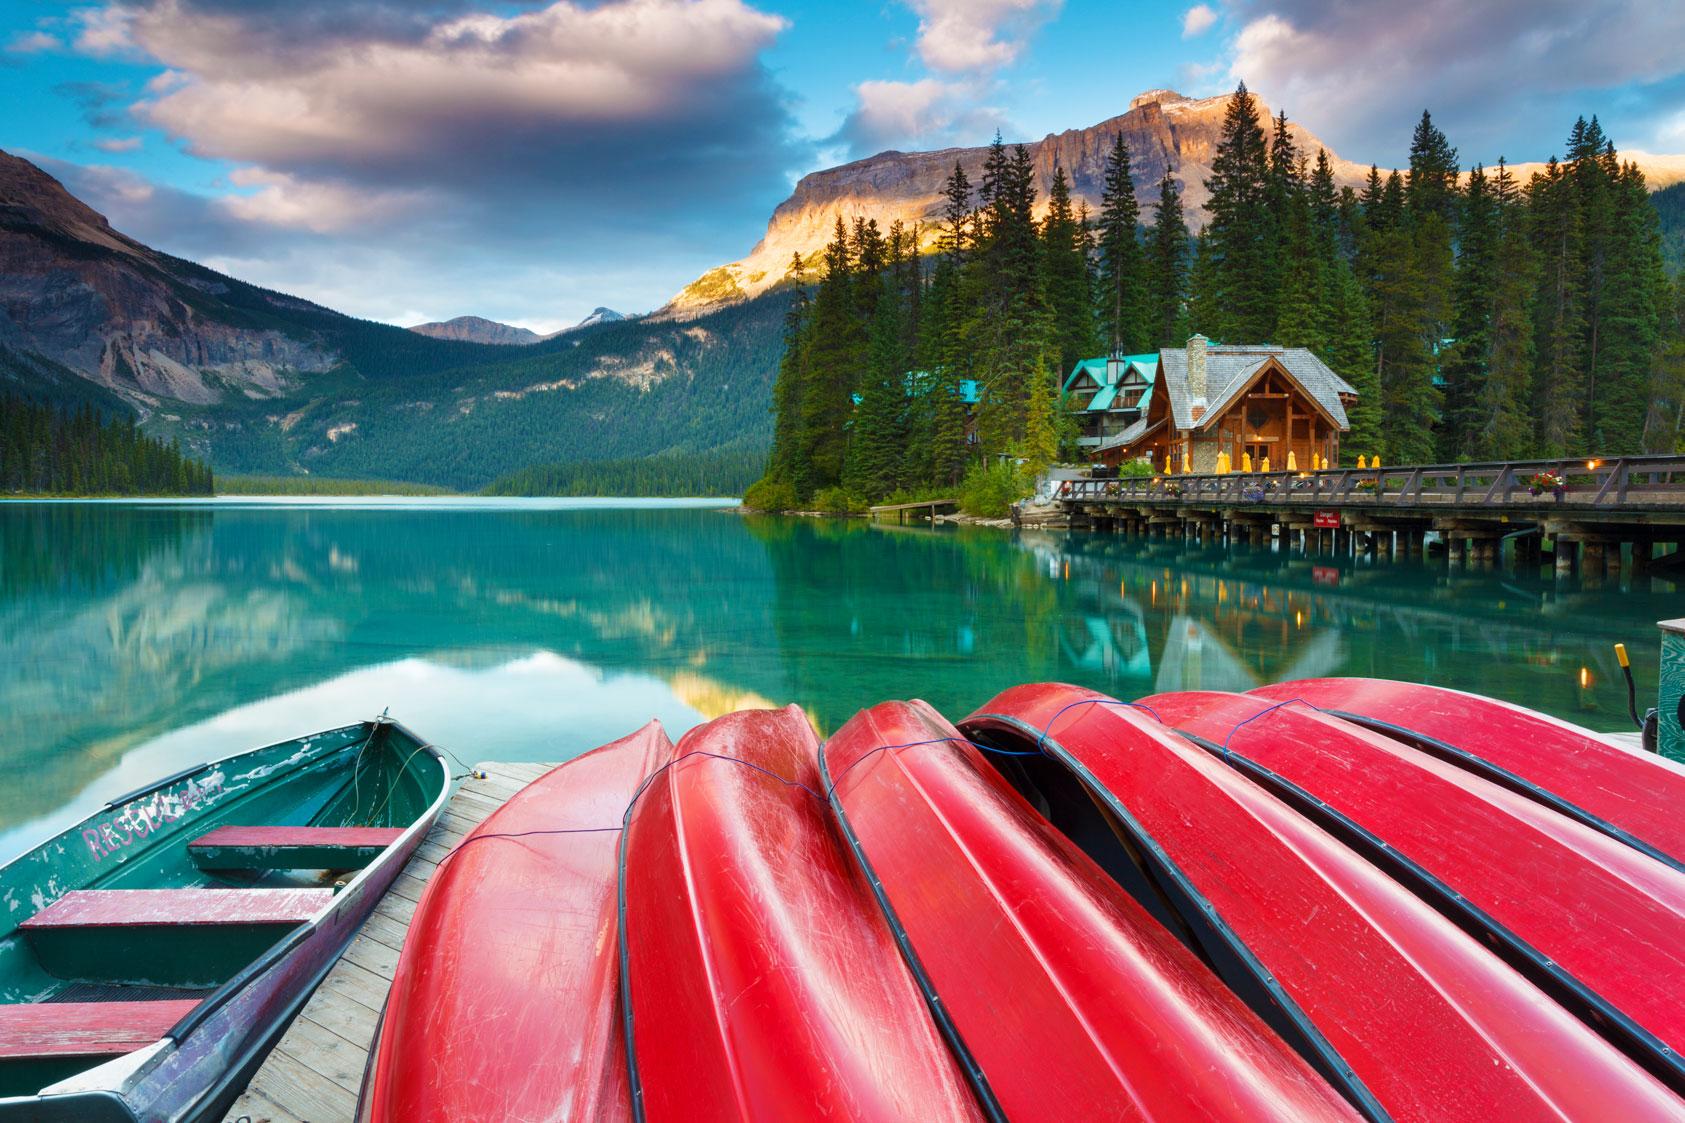 Docked row boats along lakeside Canadian lodge